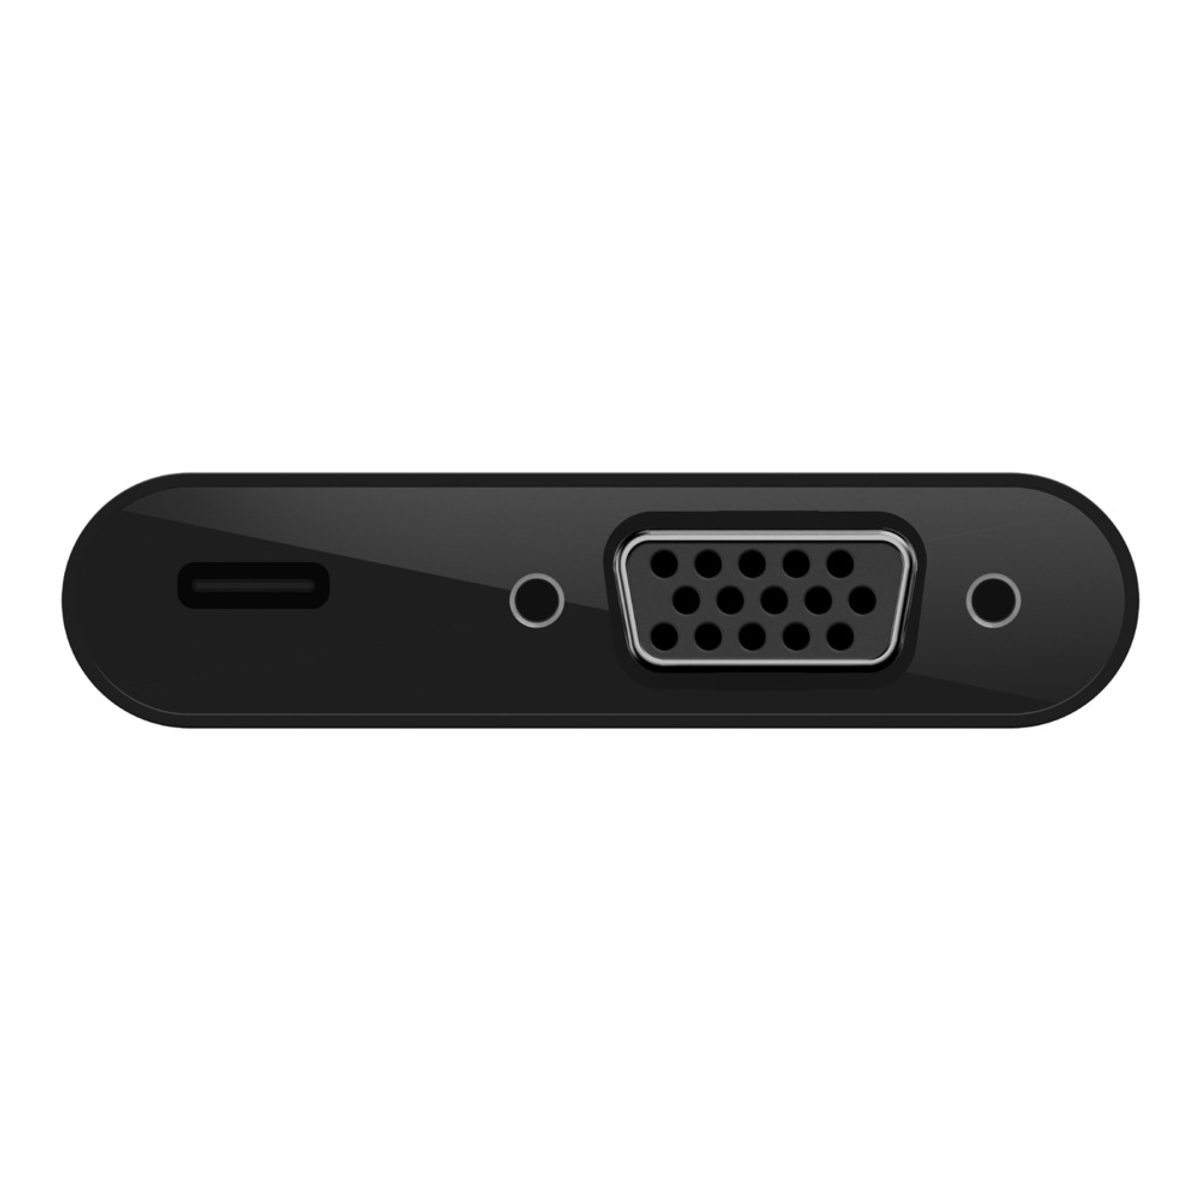 USB-C USB-C Adapter, Adapter, + / BELKIN VGA m 0,06 Video